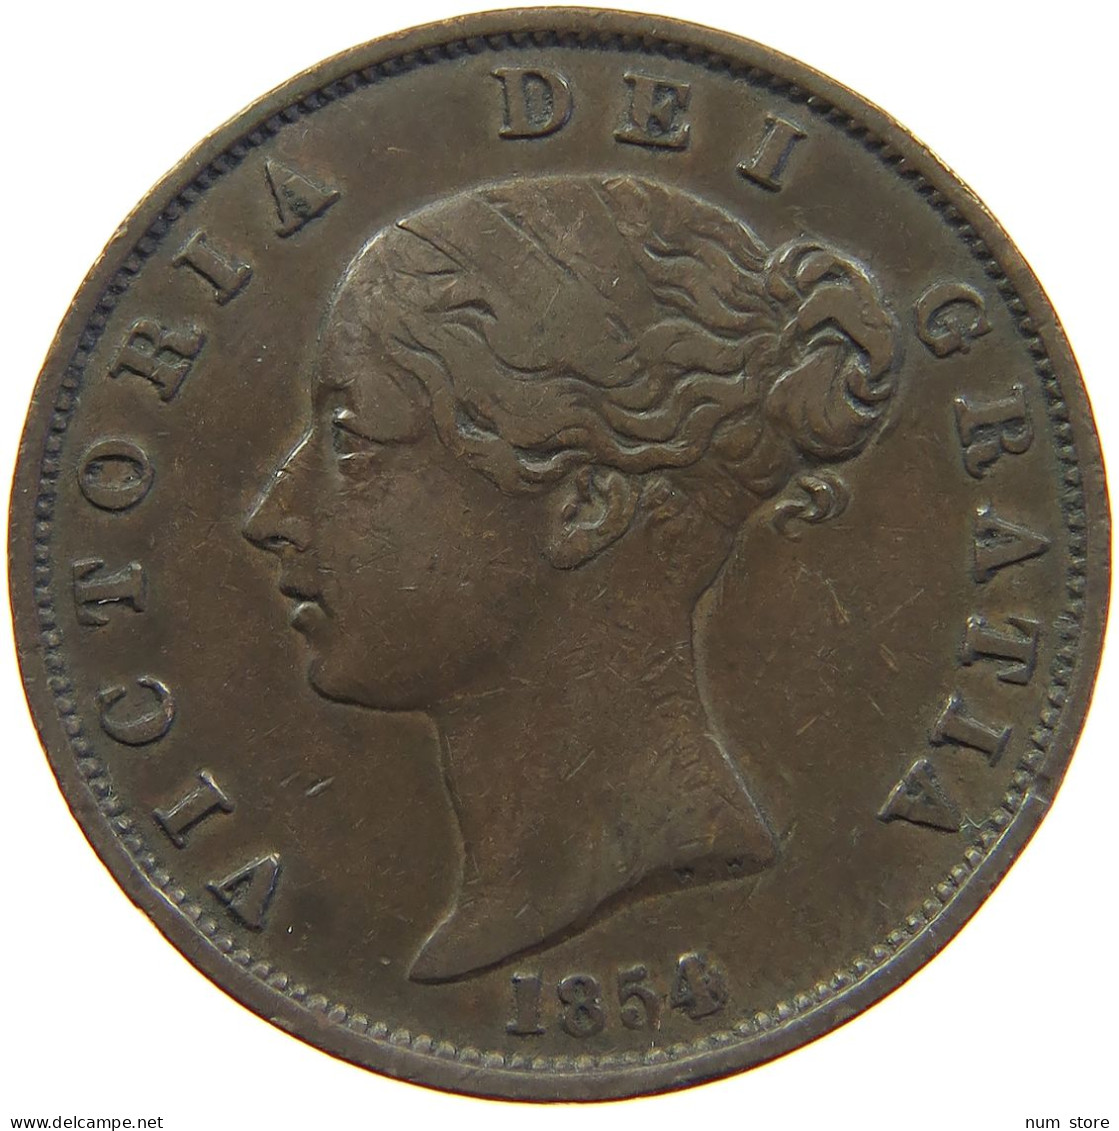 GREAT BRITAIN HALFPENNY 1854 Victoria 1837-1901 #s018 0183 - C. 1/2 Penny